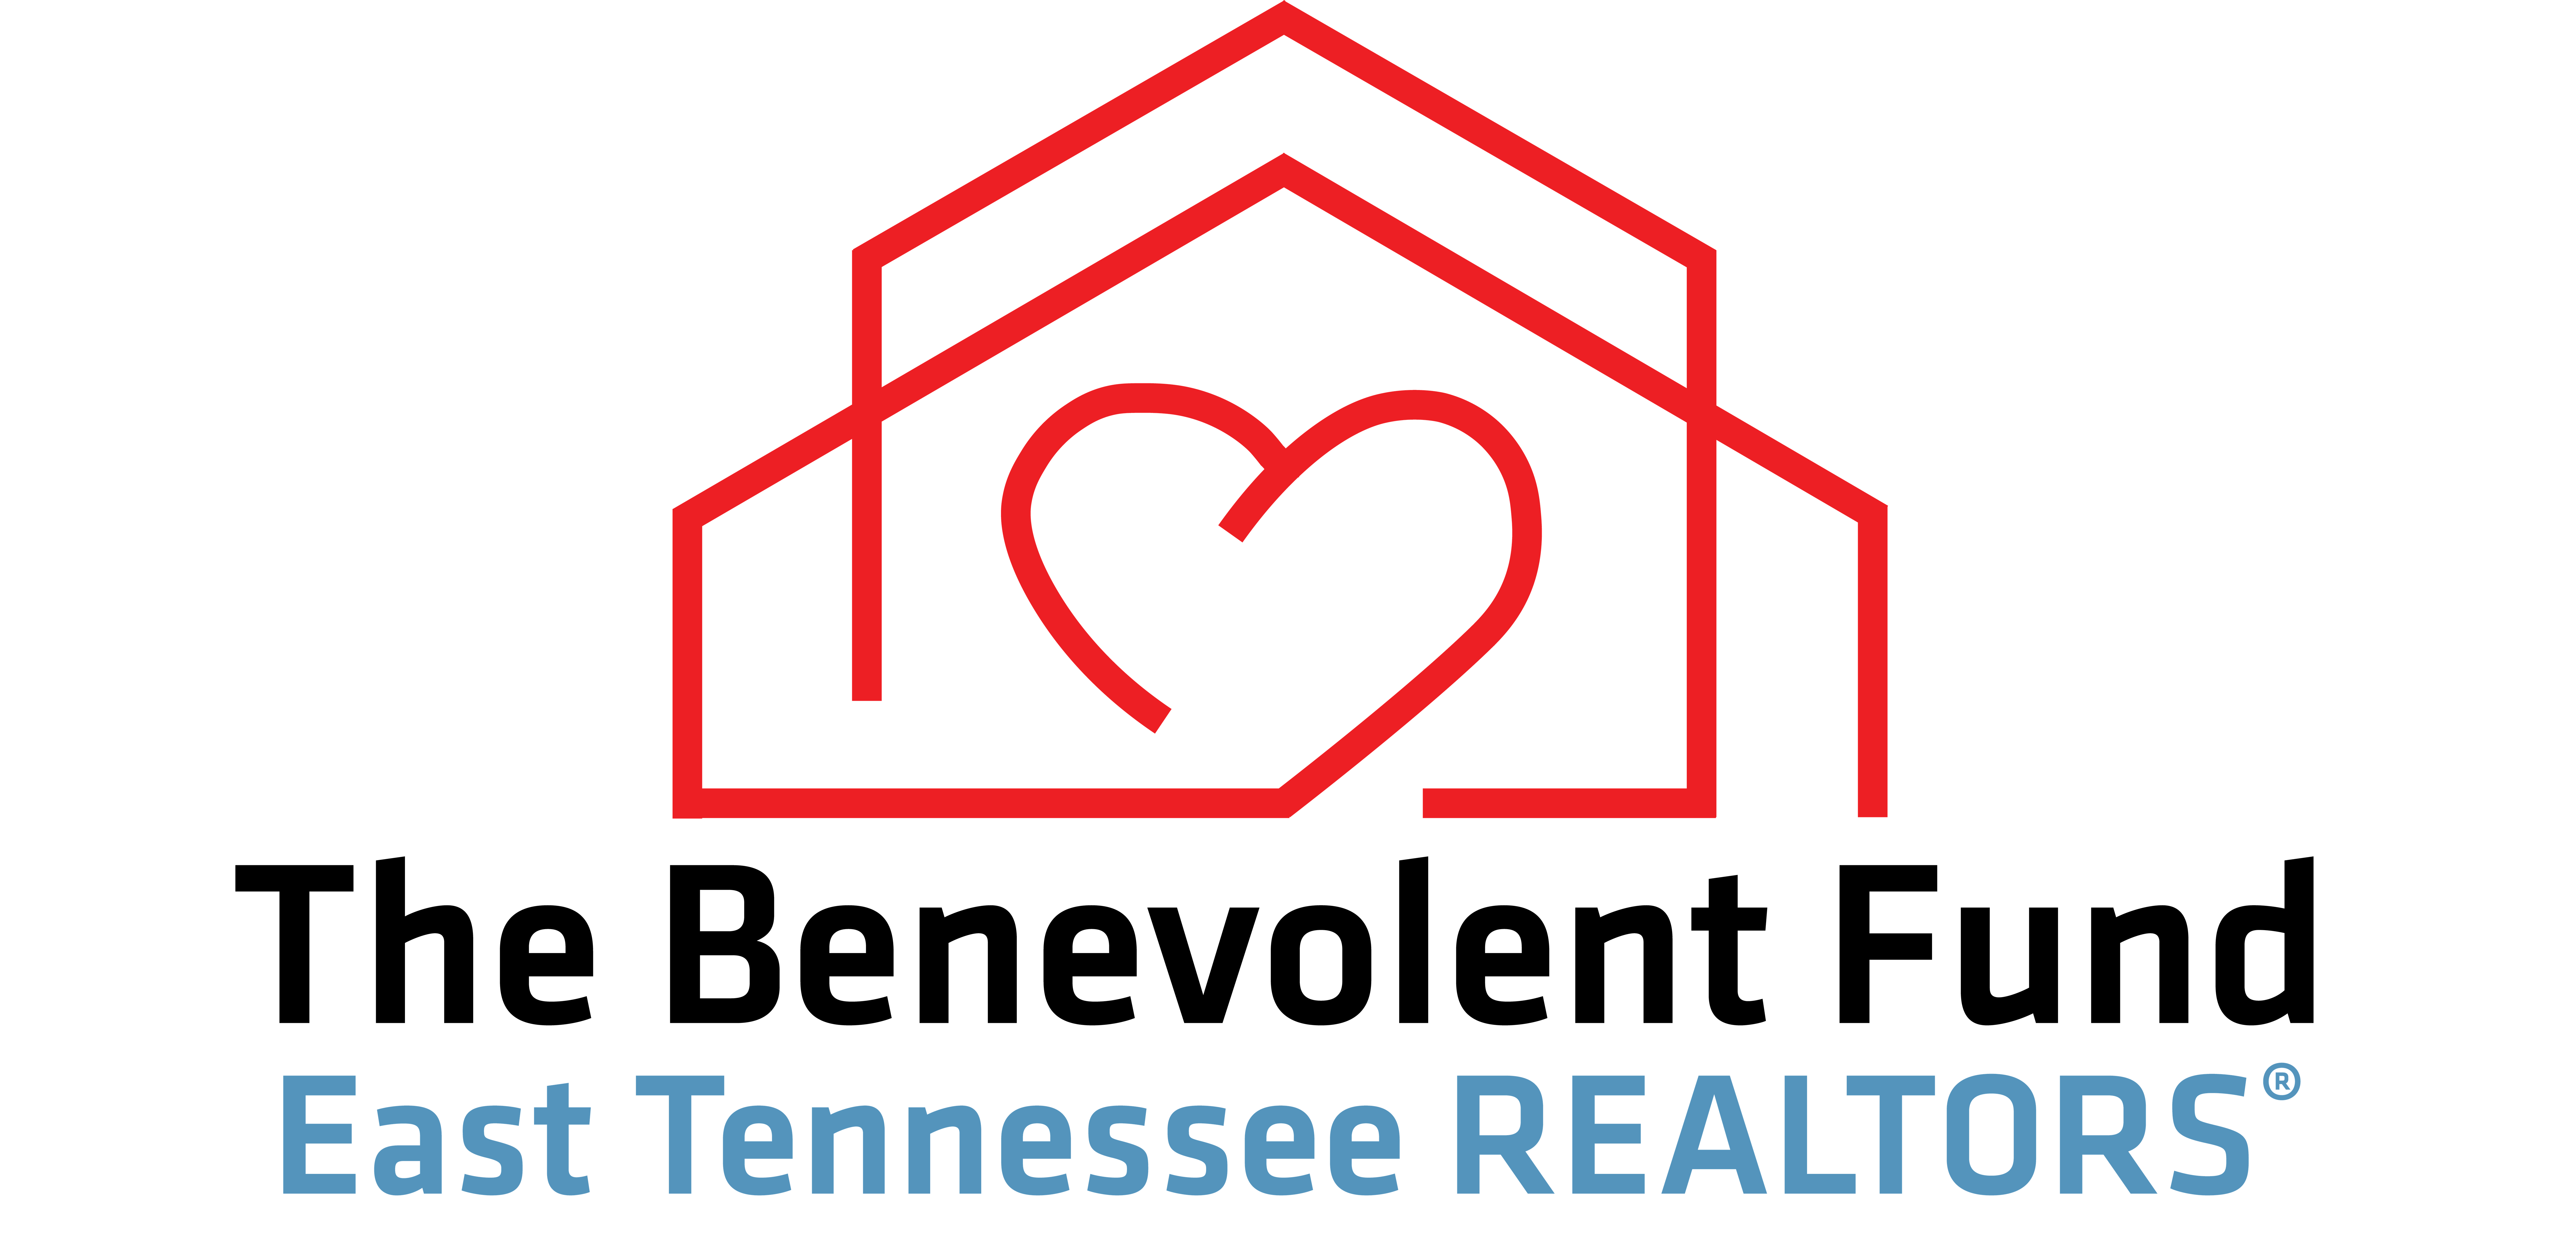 East Tennessee REALTORS Benevolent Fund logo